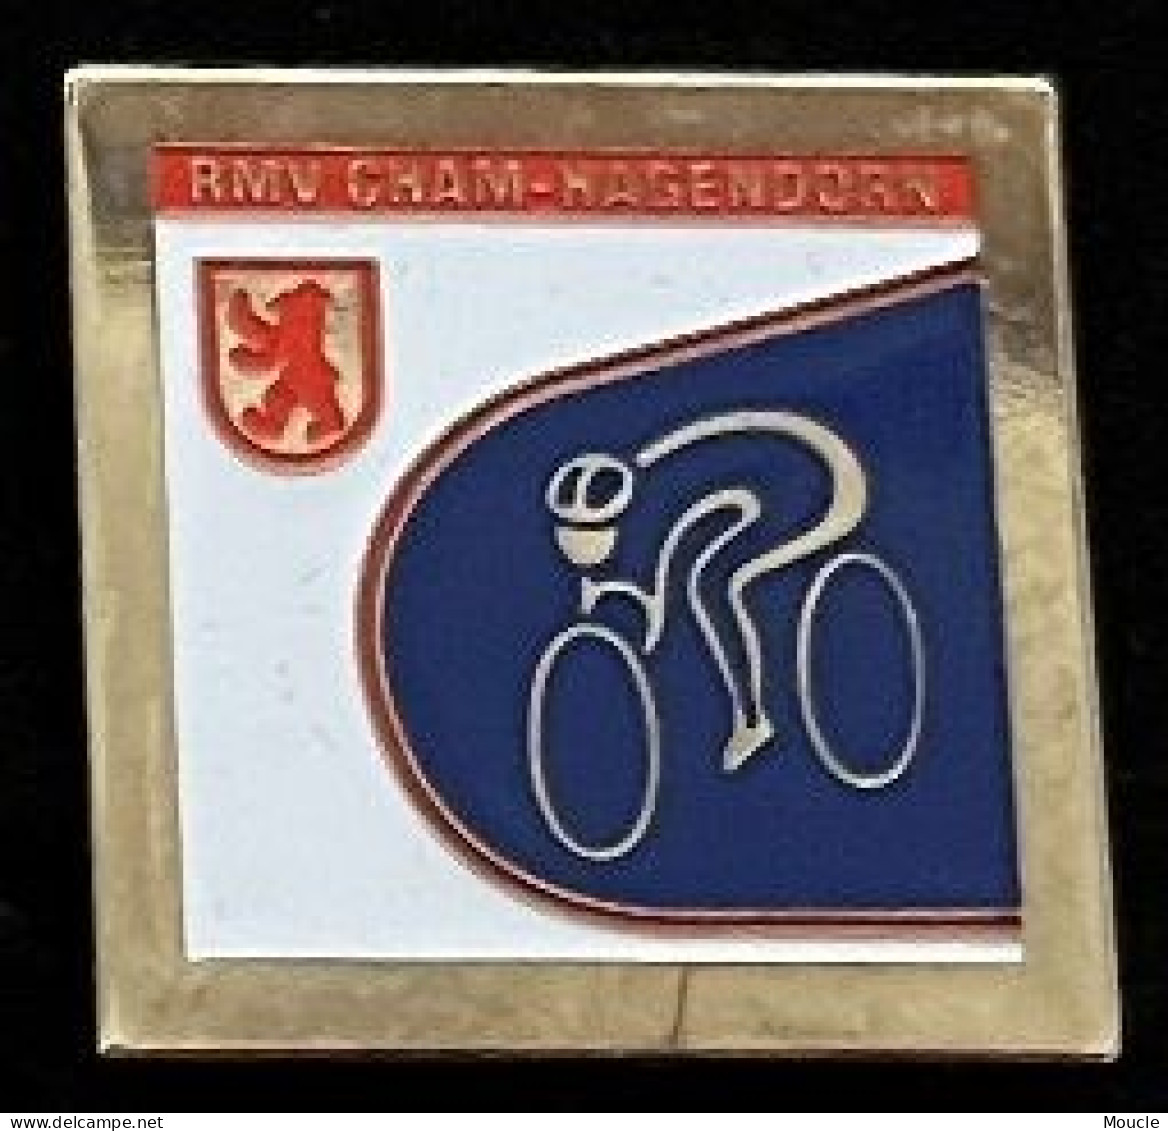 CYCLISME - VELO - BIKE - CYCLISTE - CYCLES - RMV - VELO CLUB - CHAM - HAGENDORN - SUISSE - SCHWEIZ - SWITZERLAND -  (33) - Radsport